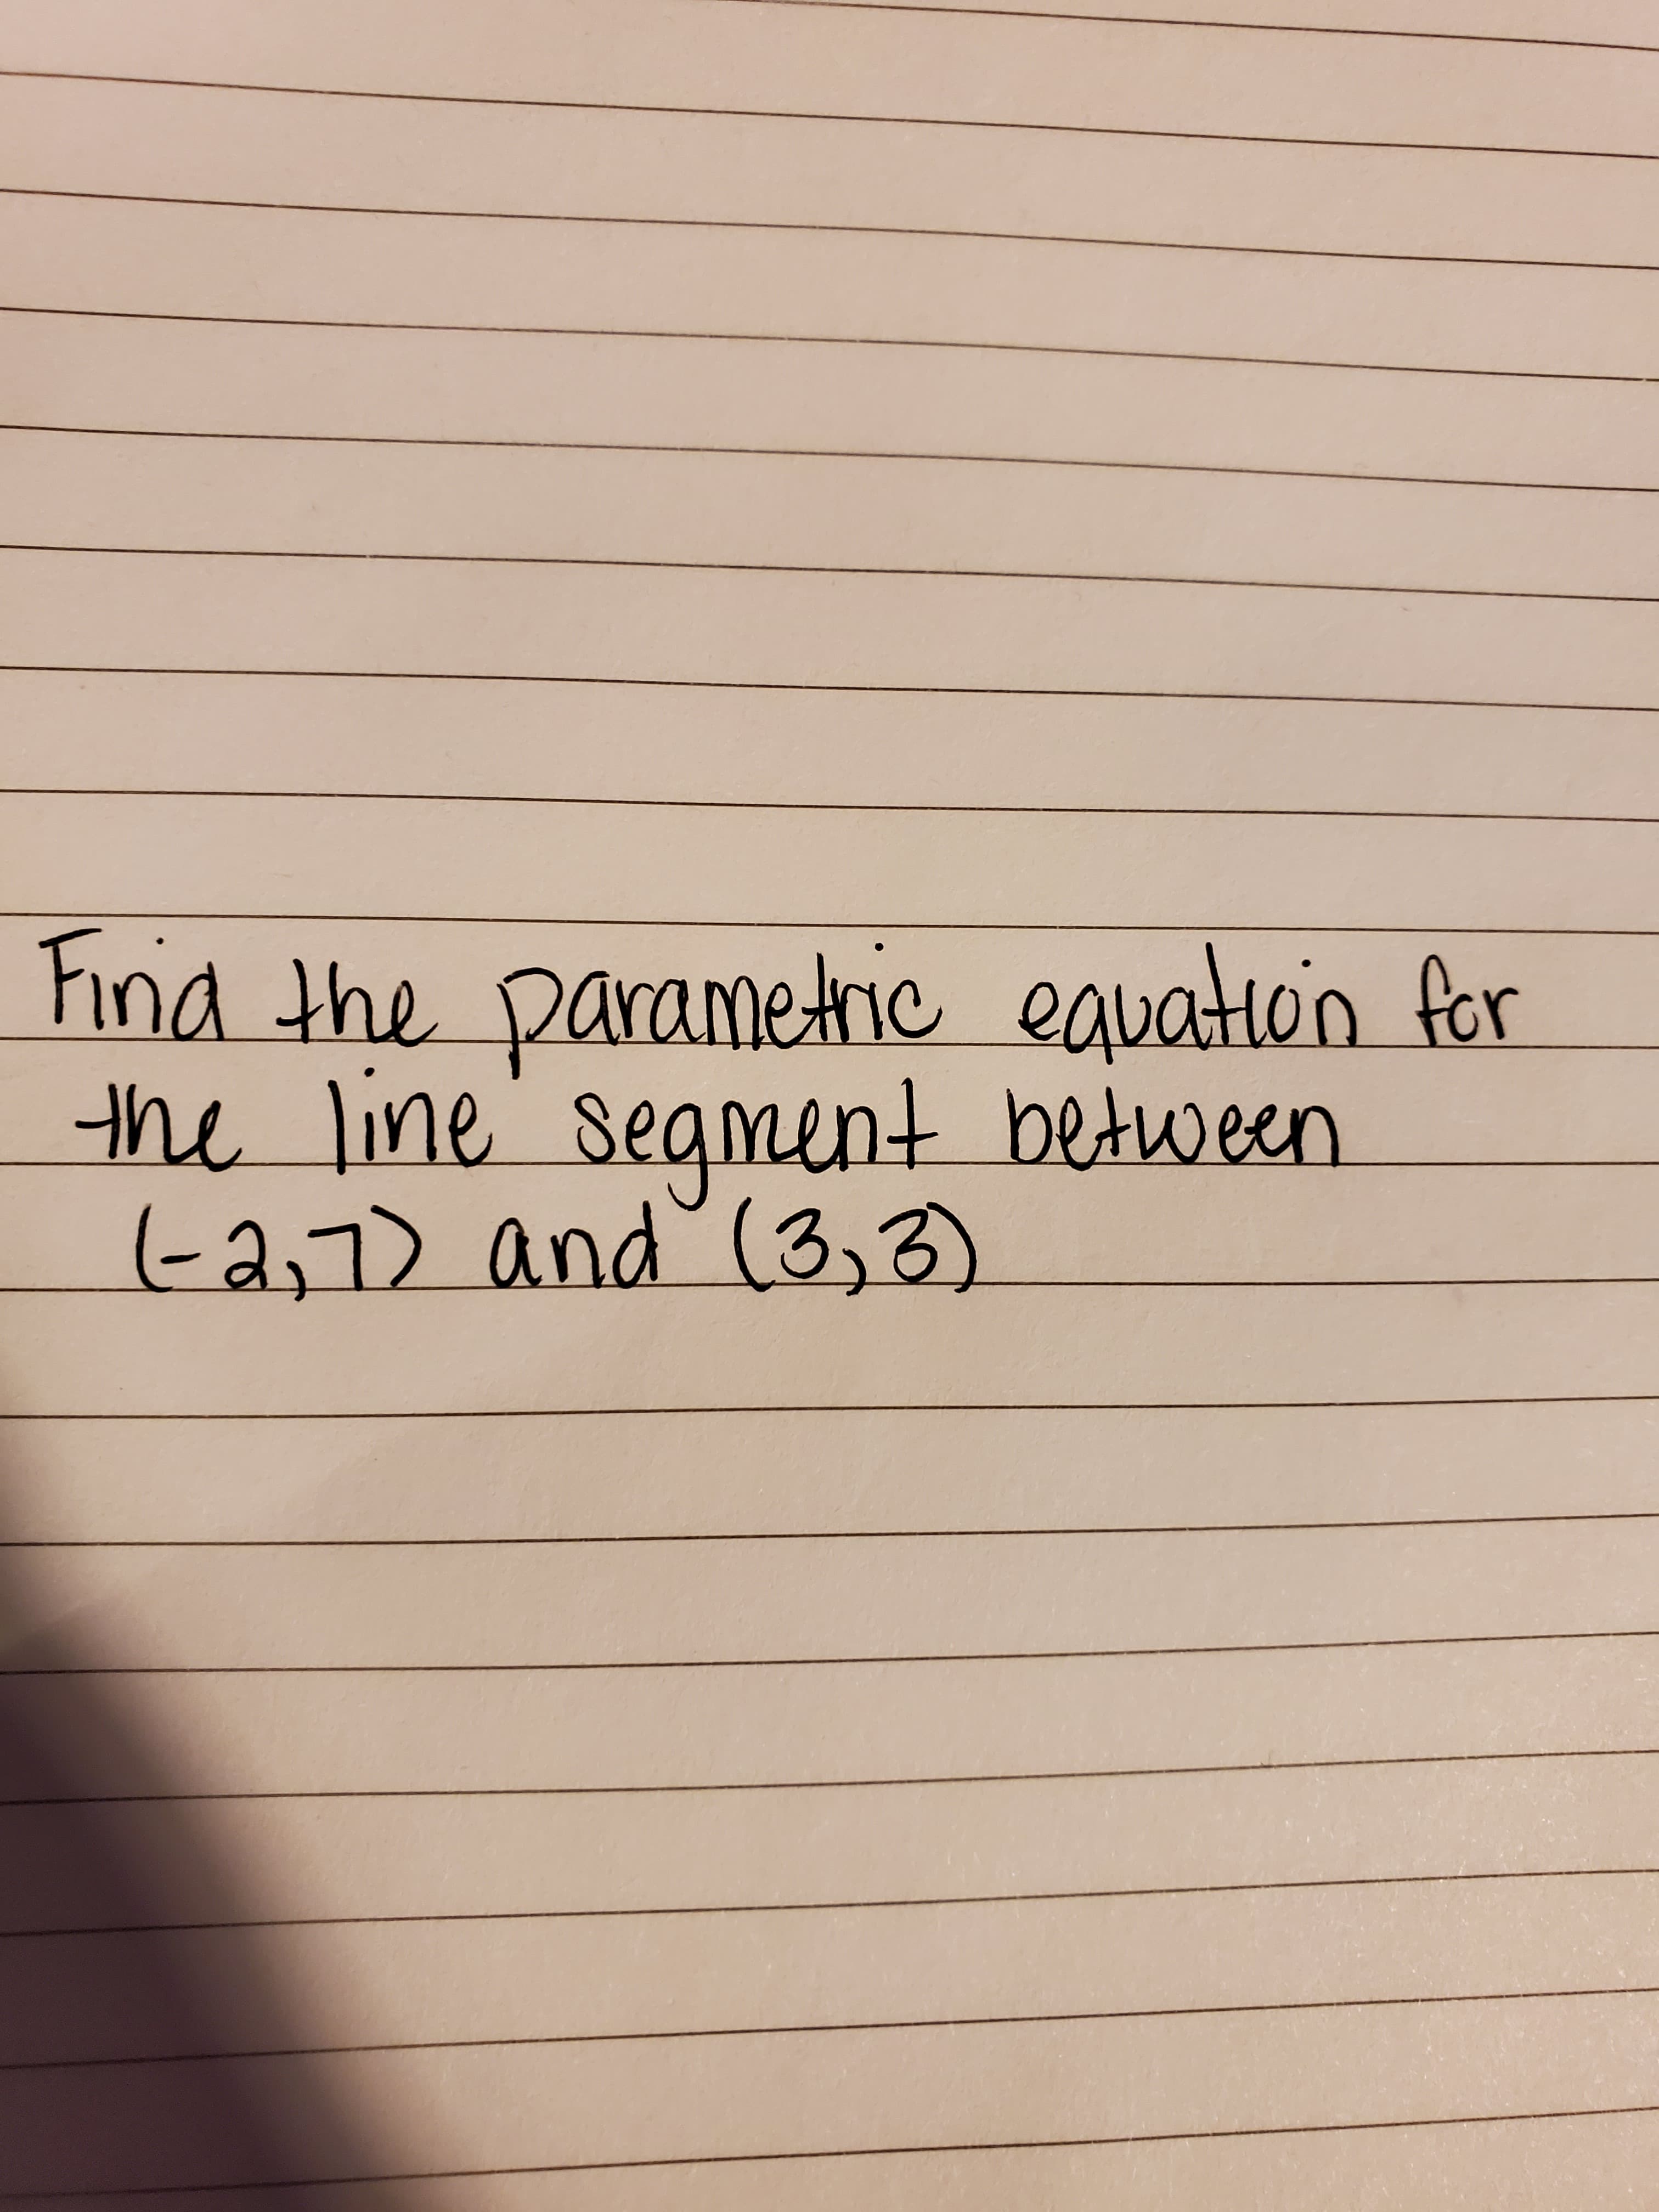 | the parametric equatioin for
e line segment between
a7) and (3,3)
